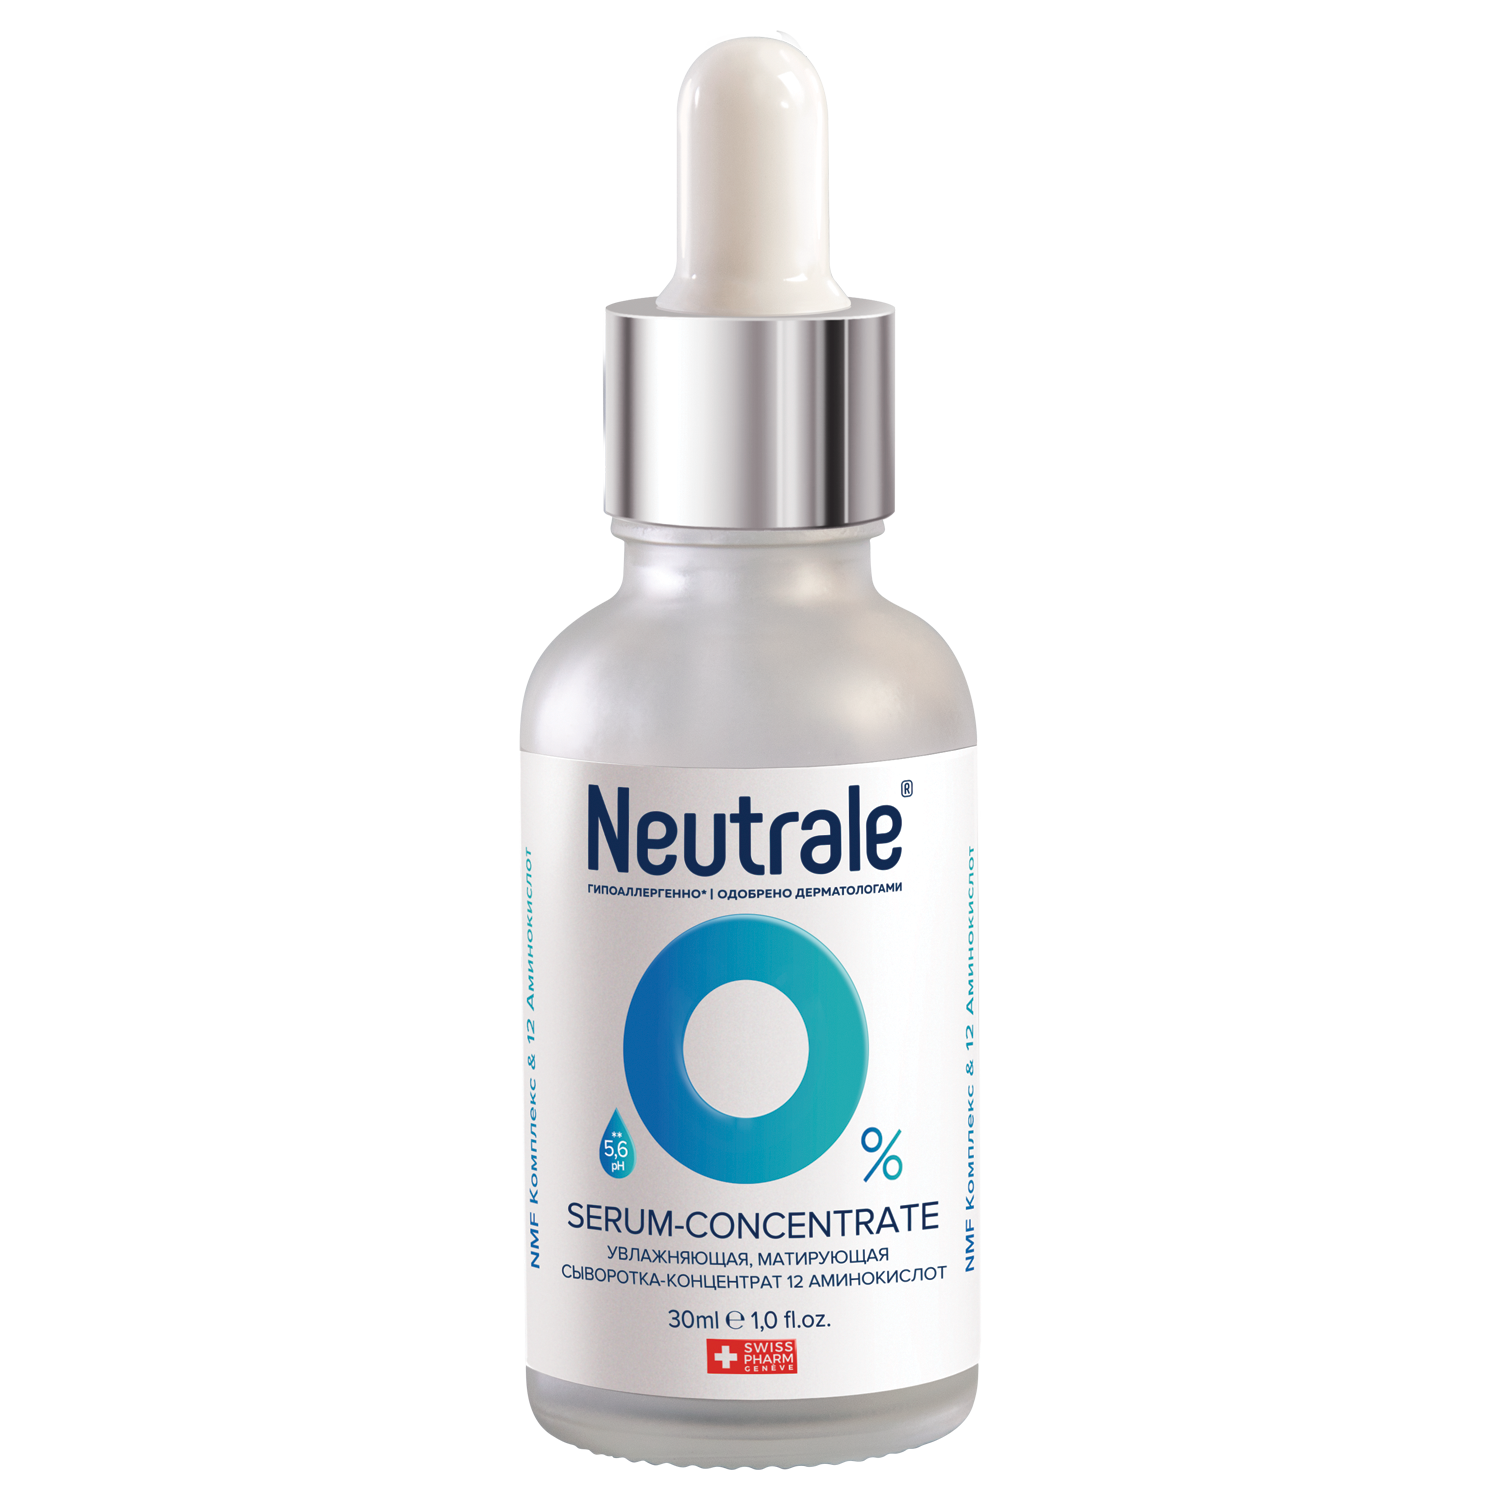 Cыворотка для лица Neutrale Увлажняющая матирующая 12 аминокислот 30 мл - фото 2